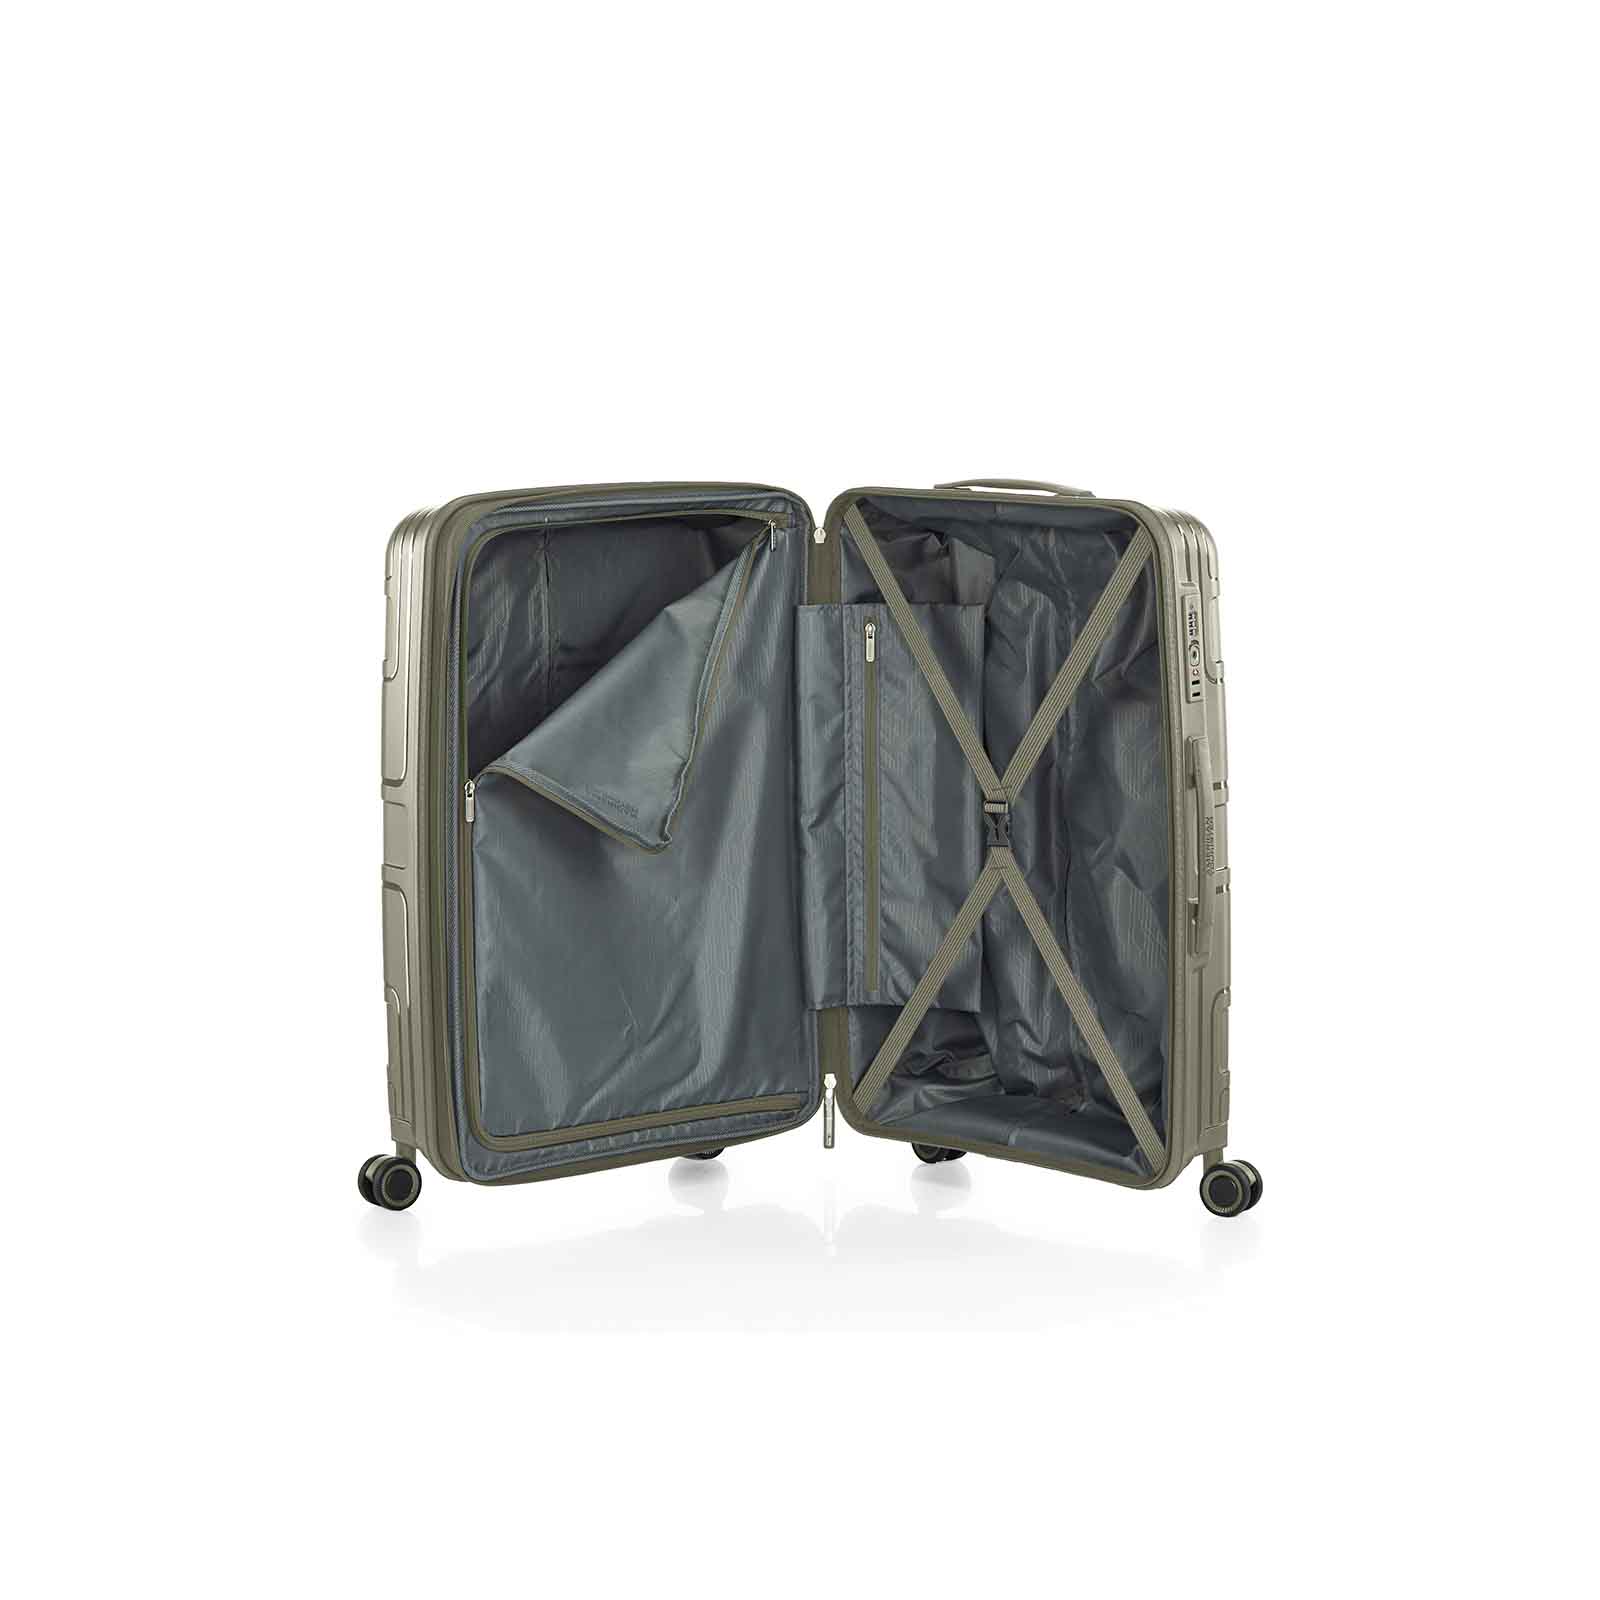 American-Tourister-Light-Max-69cm-Suitcase-Khaki-Open